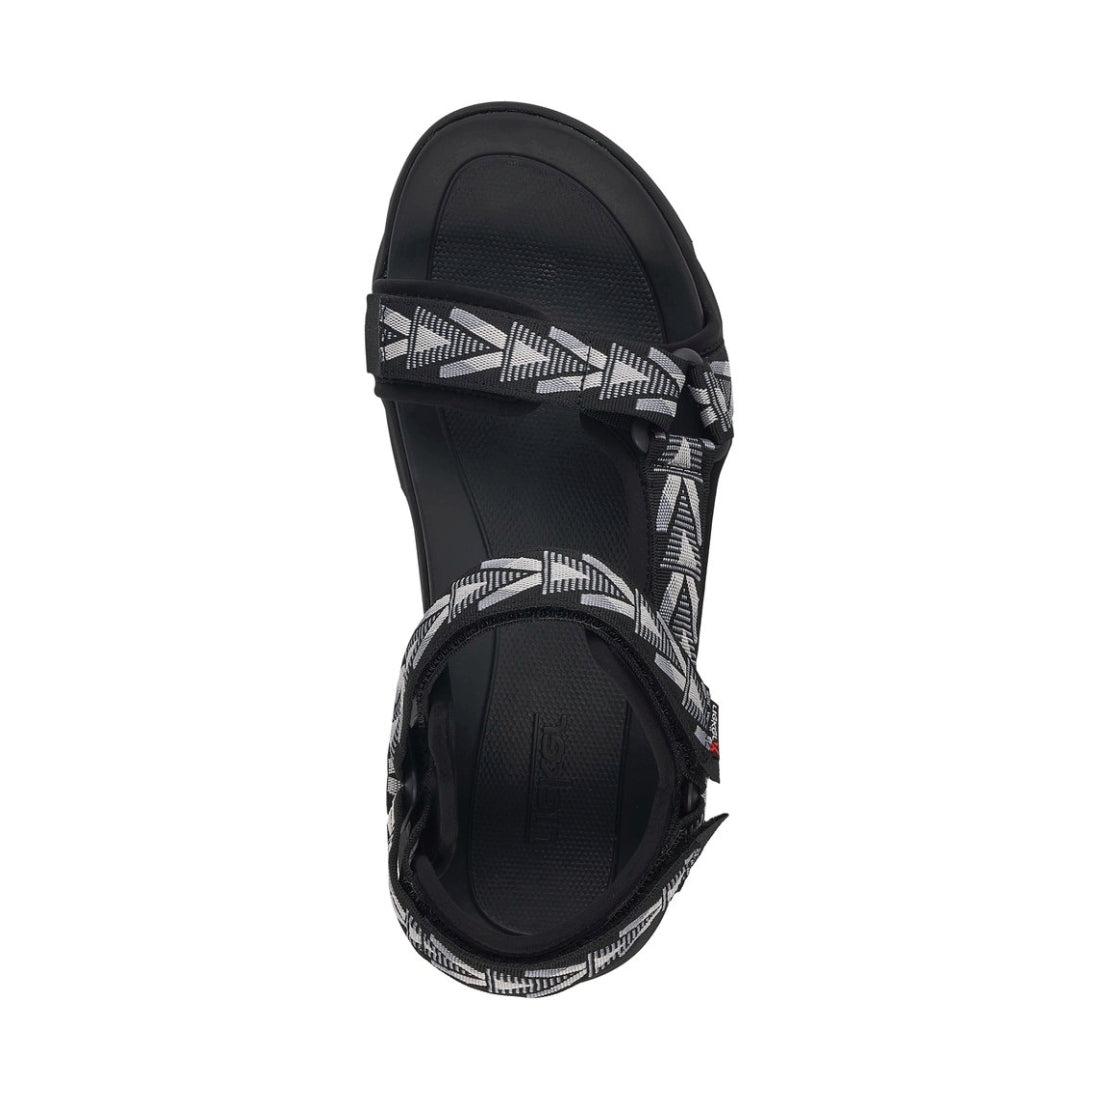 Rieker Mens schwarz casual open sandals | Vilbury London